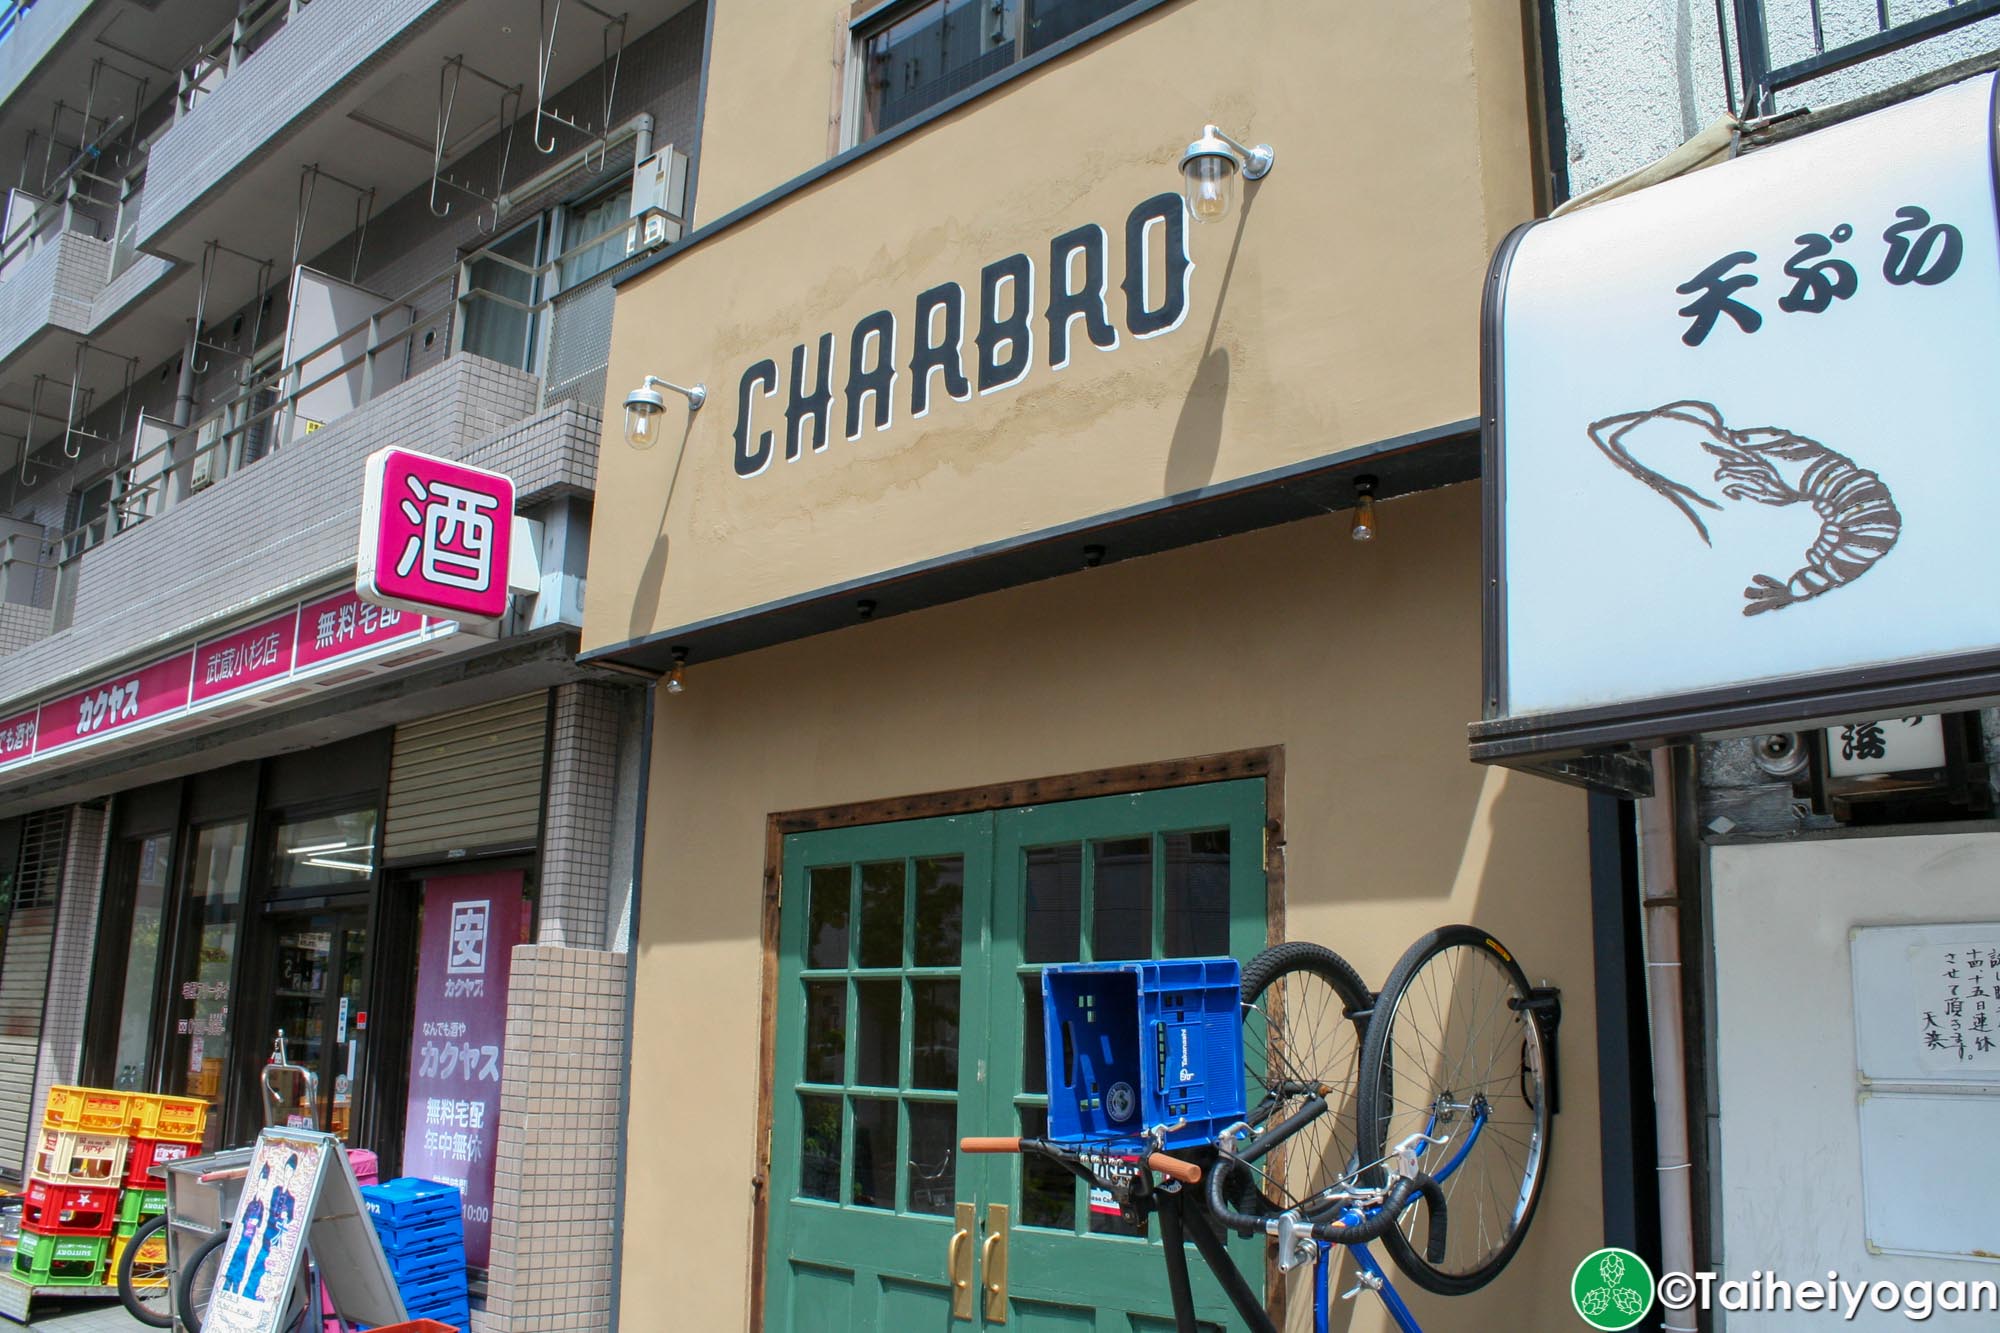 Charbro - Entrance